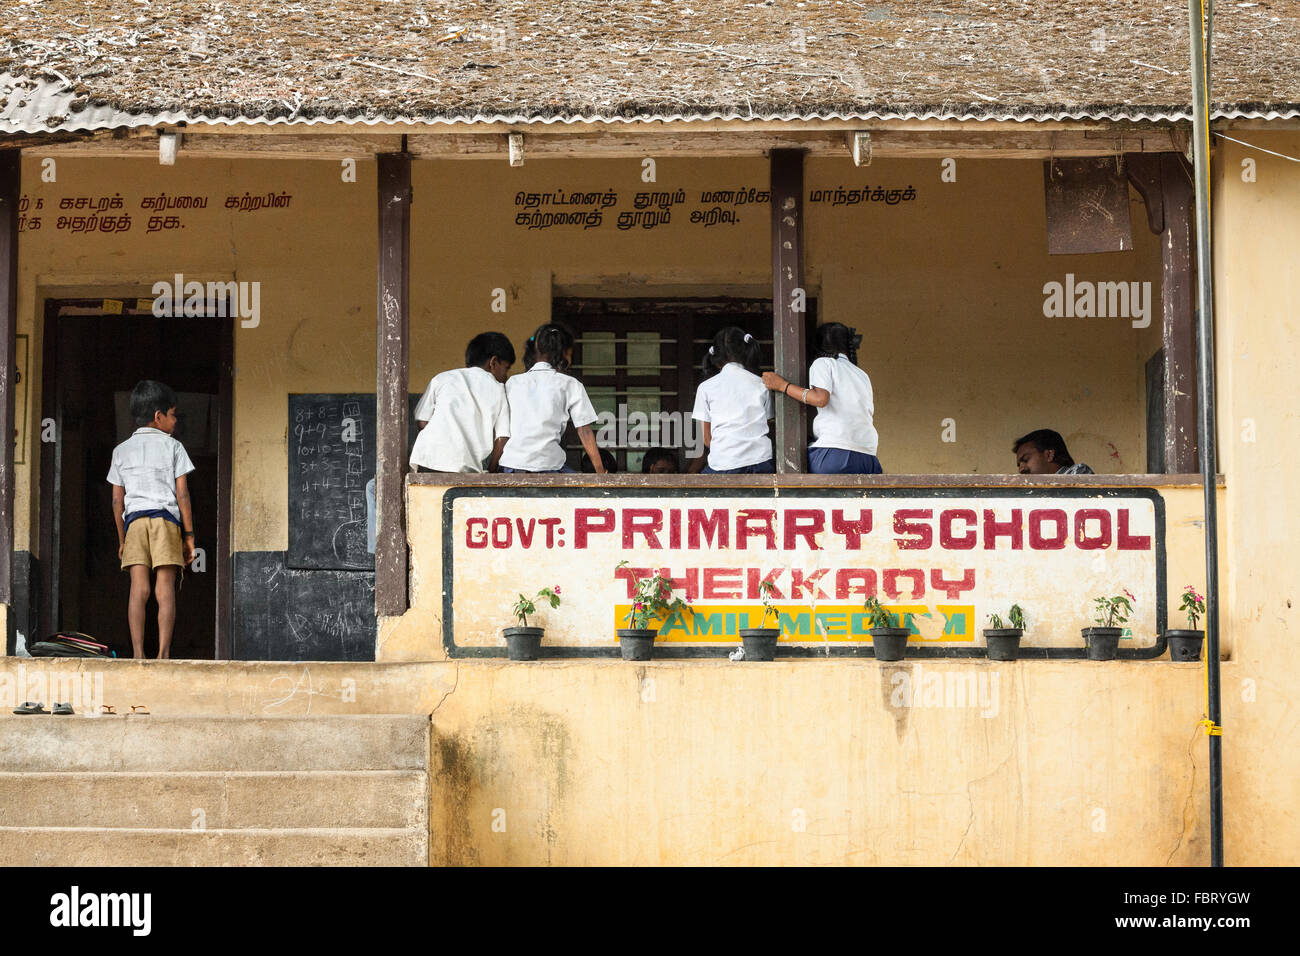 Primary school - South India. Stock Photo